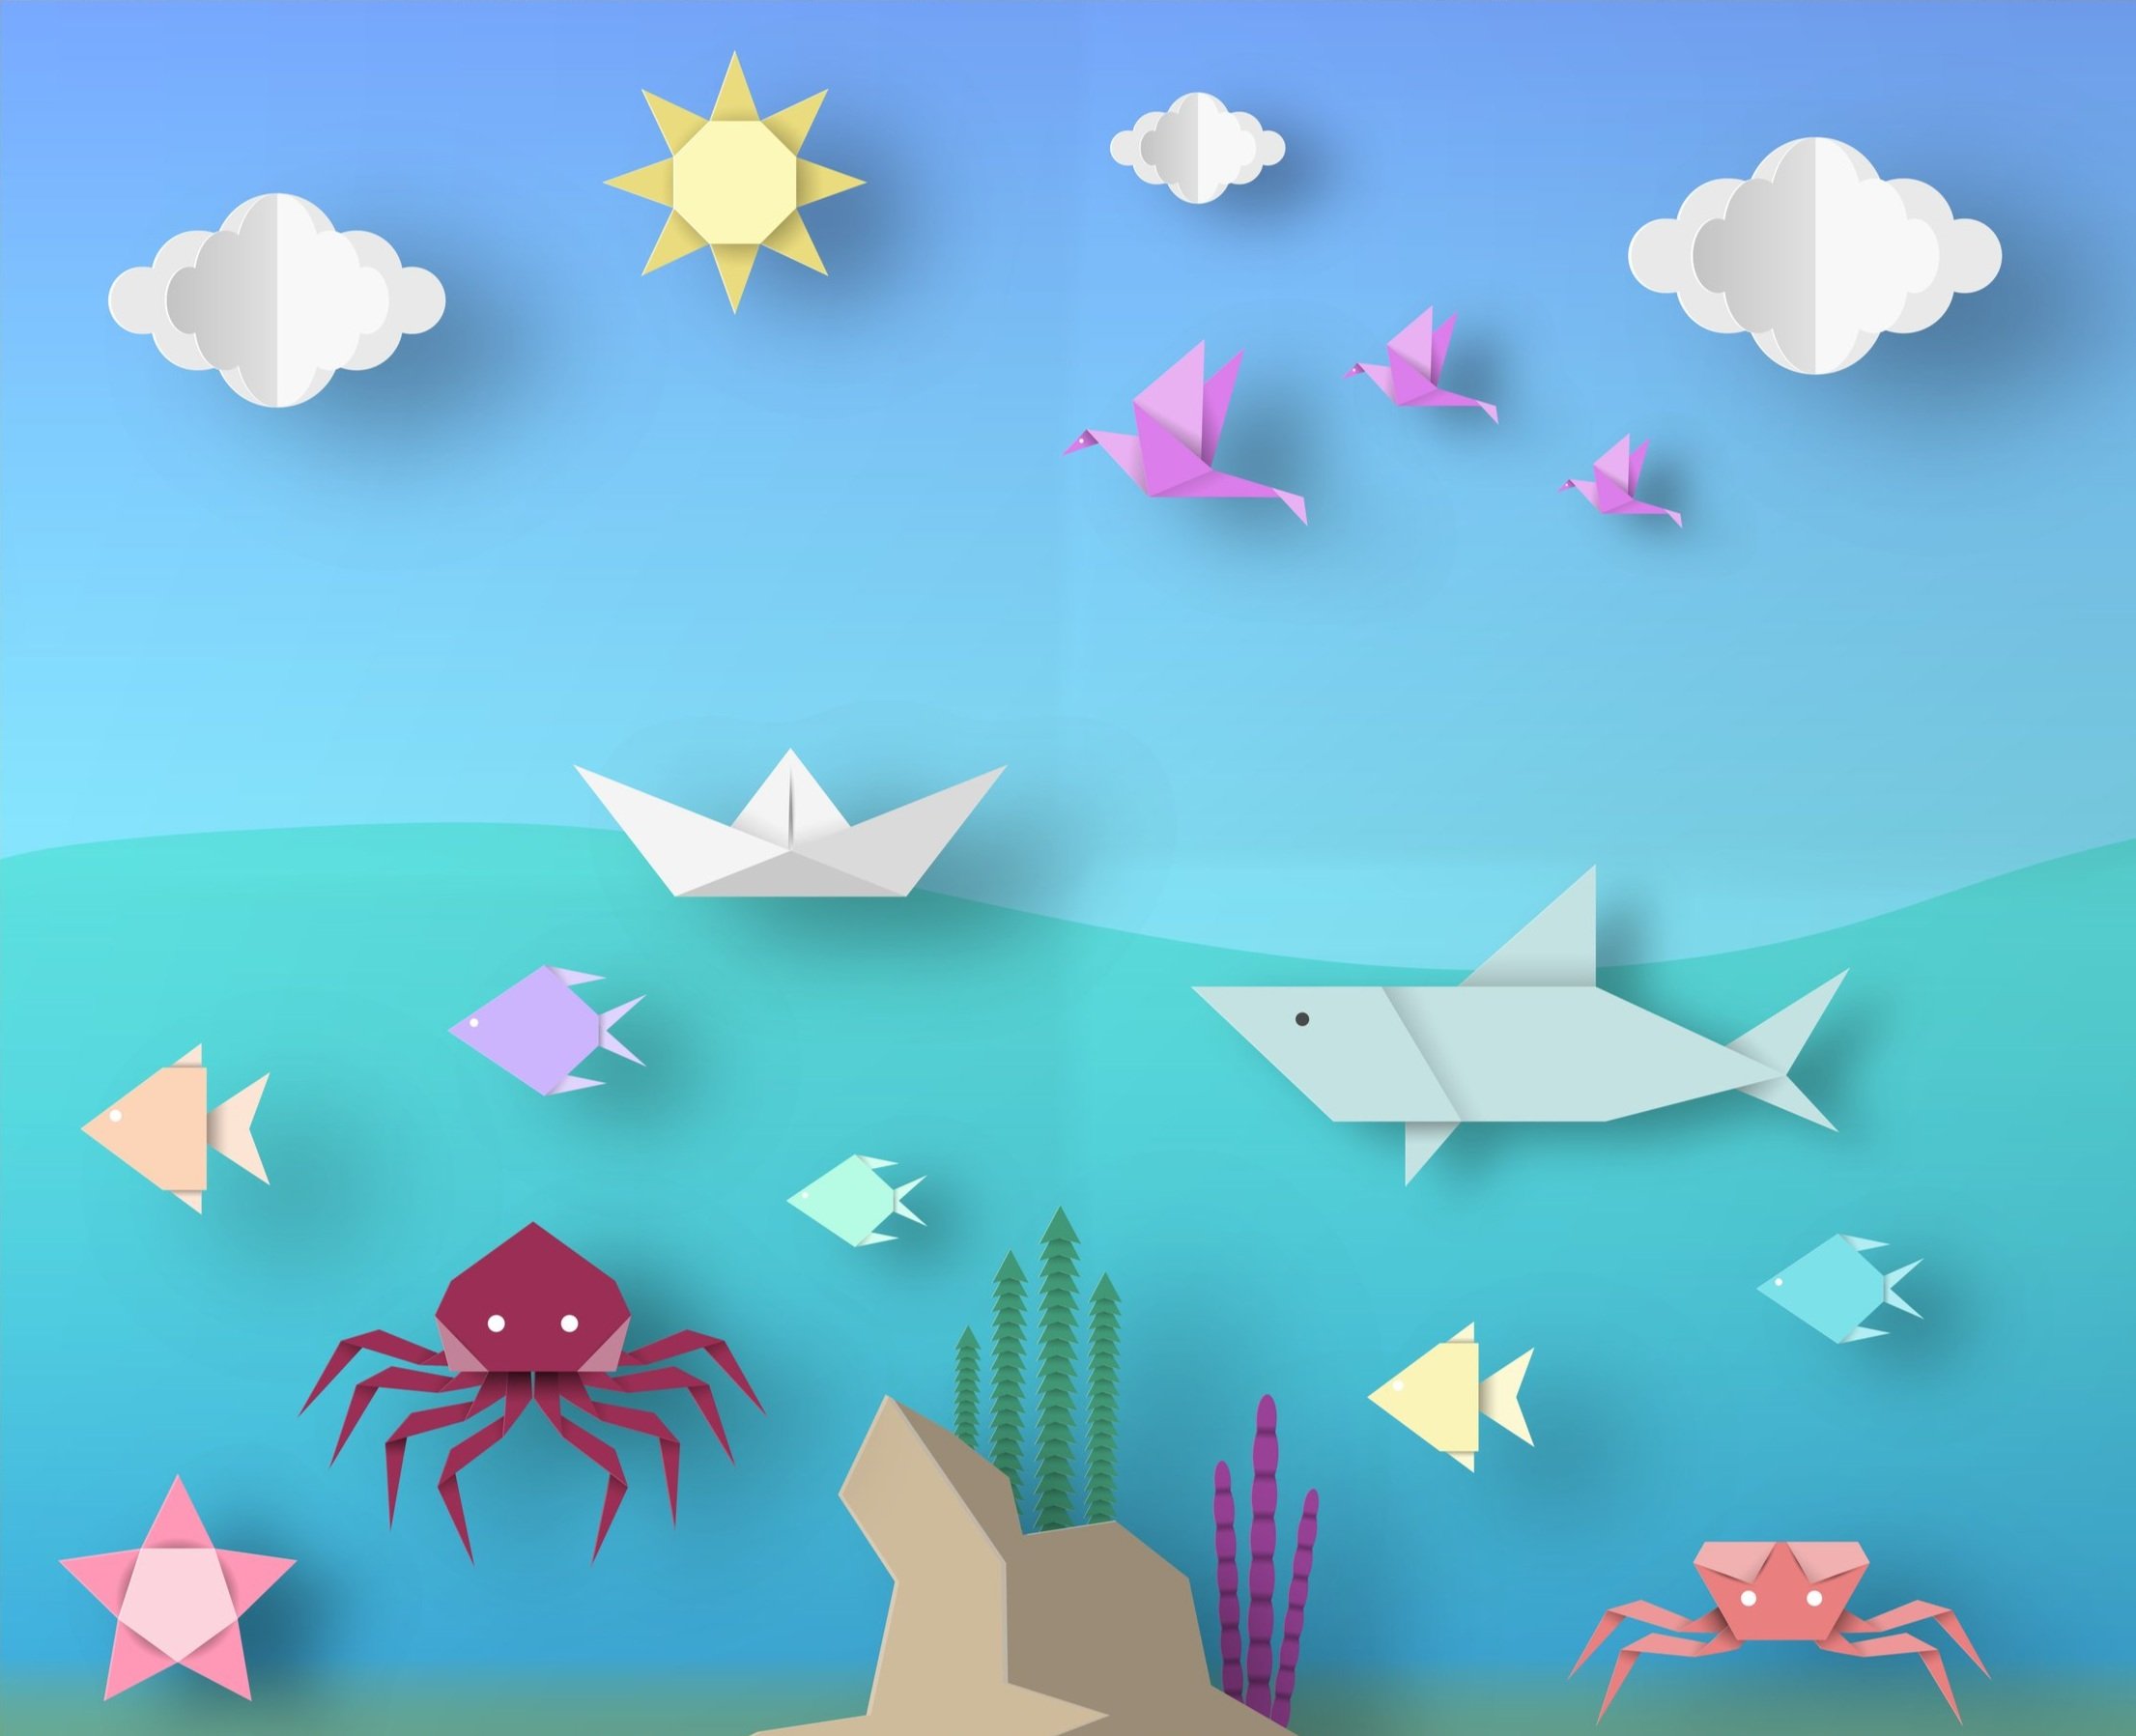 Fish Origami: Easy Kids' Tutorial — Kvaroy Arctic